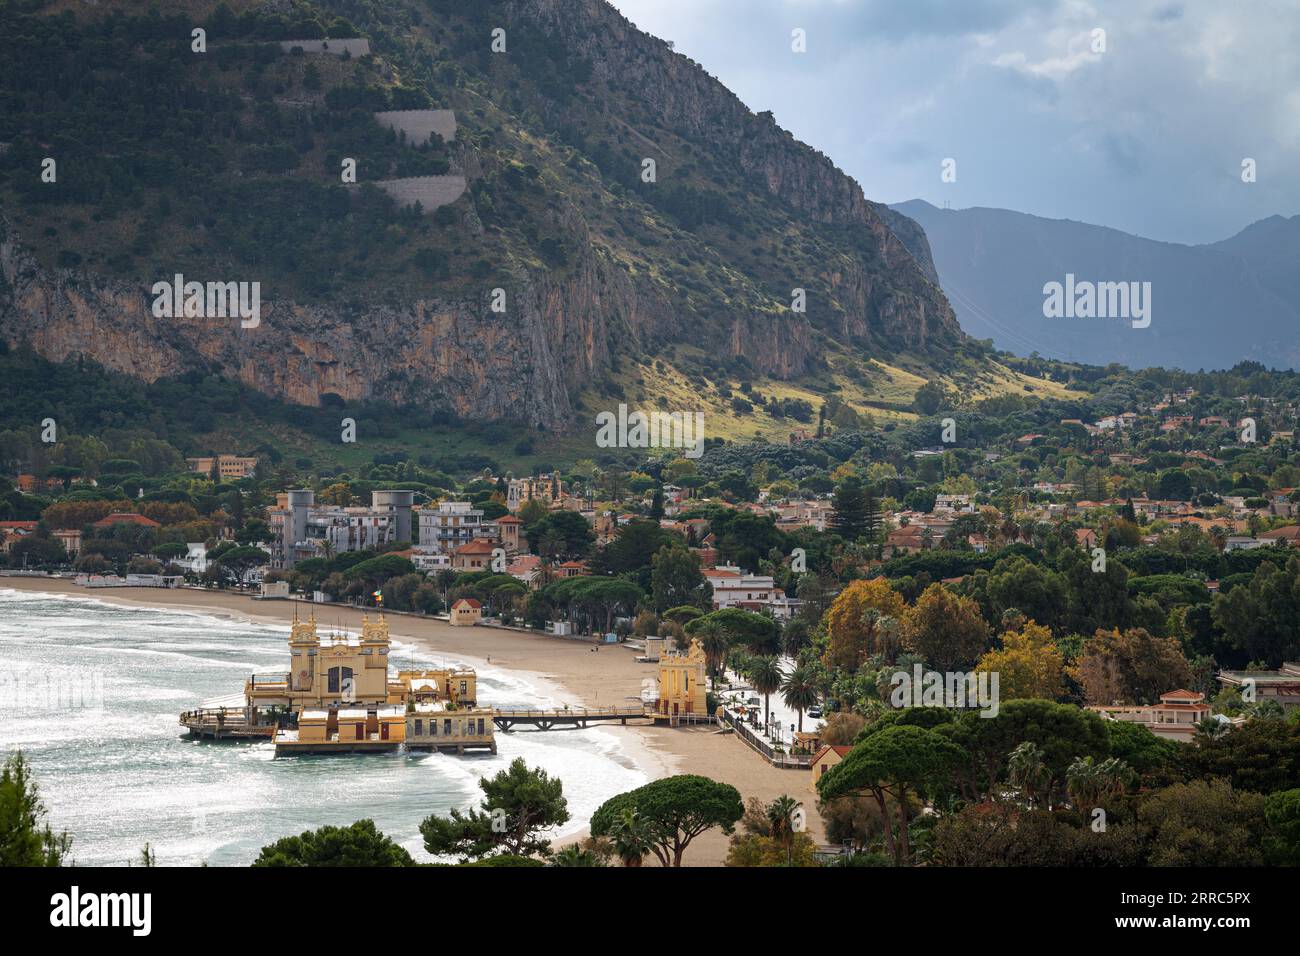 Mondello, Palermo, Italy over the beach with Monte Pellegrino in the background. Stock Photo